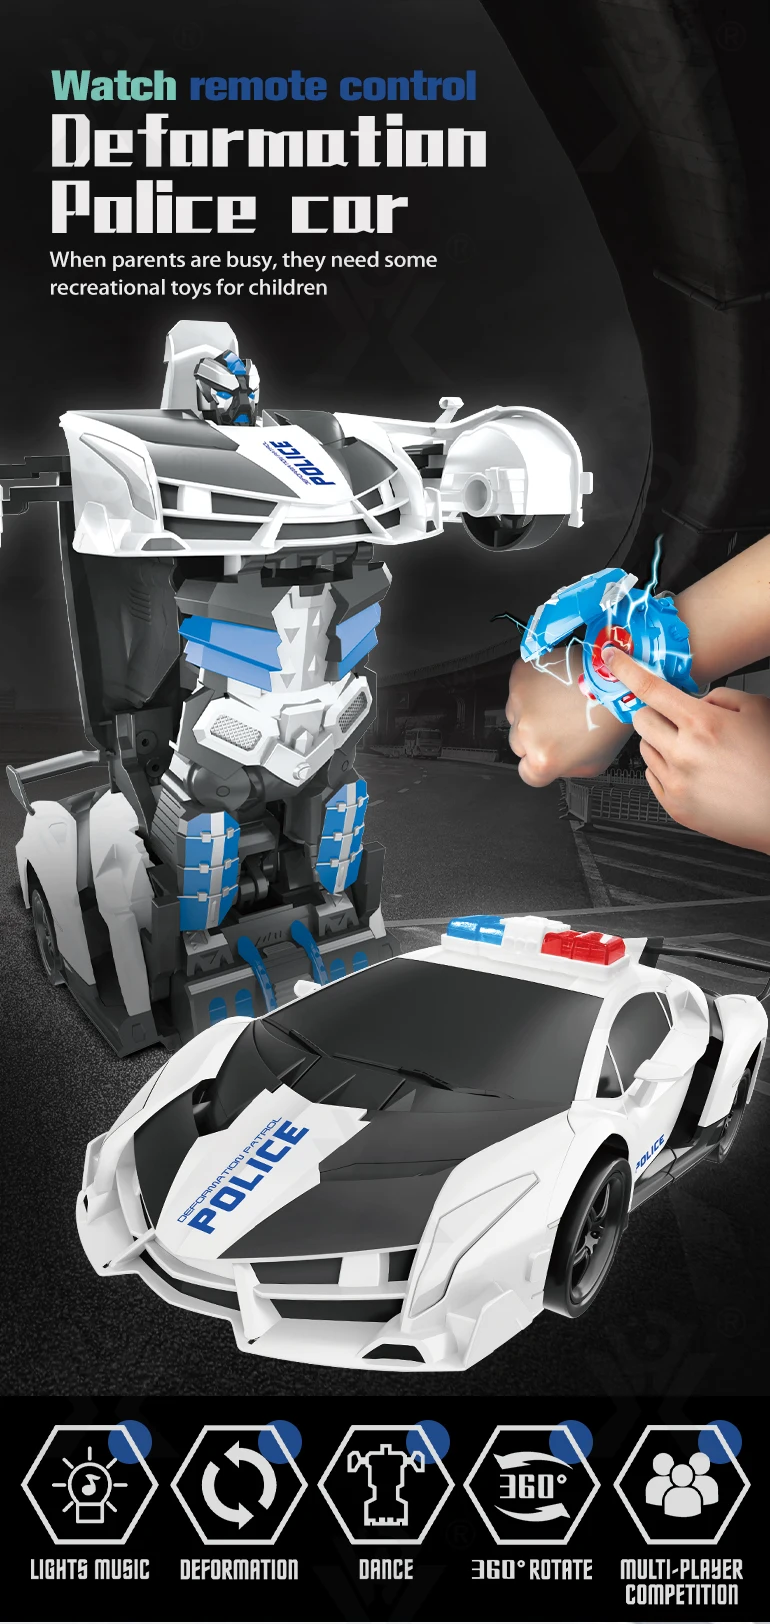 Chengji jouet enfant 2022 watch control one-key deformation car toys 2.4g remote control deformation police robot car for kids